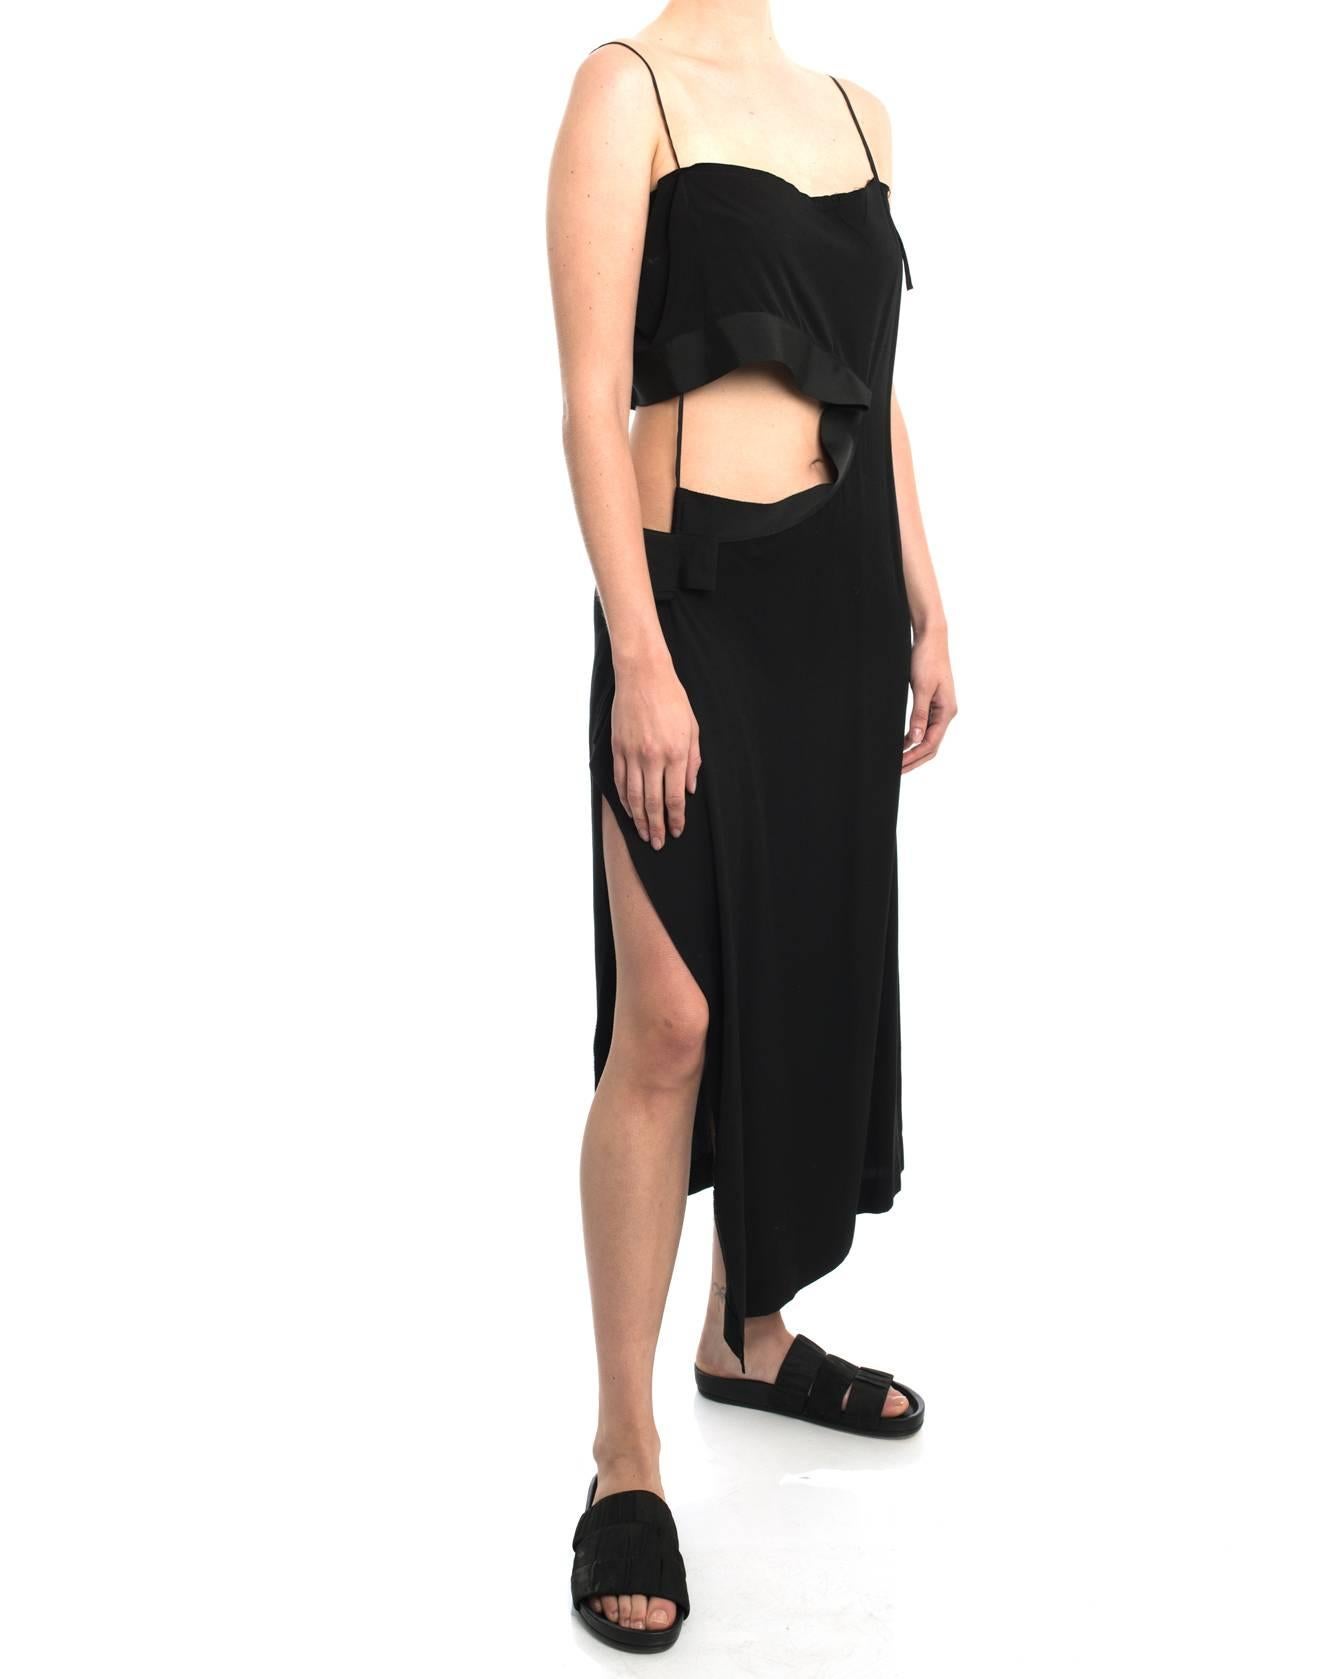 Yohji Yamamoto 2004 Black Long Column Dress with Cut out Waist Design 2